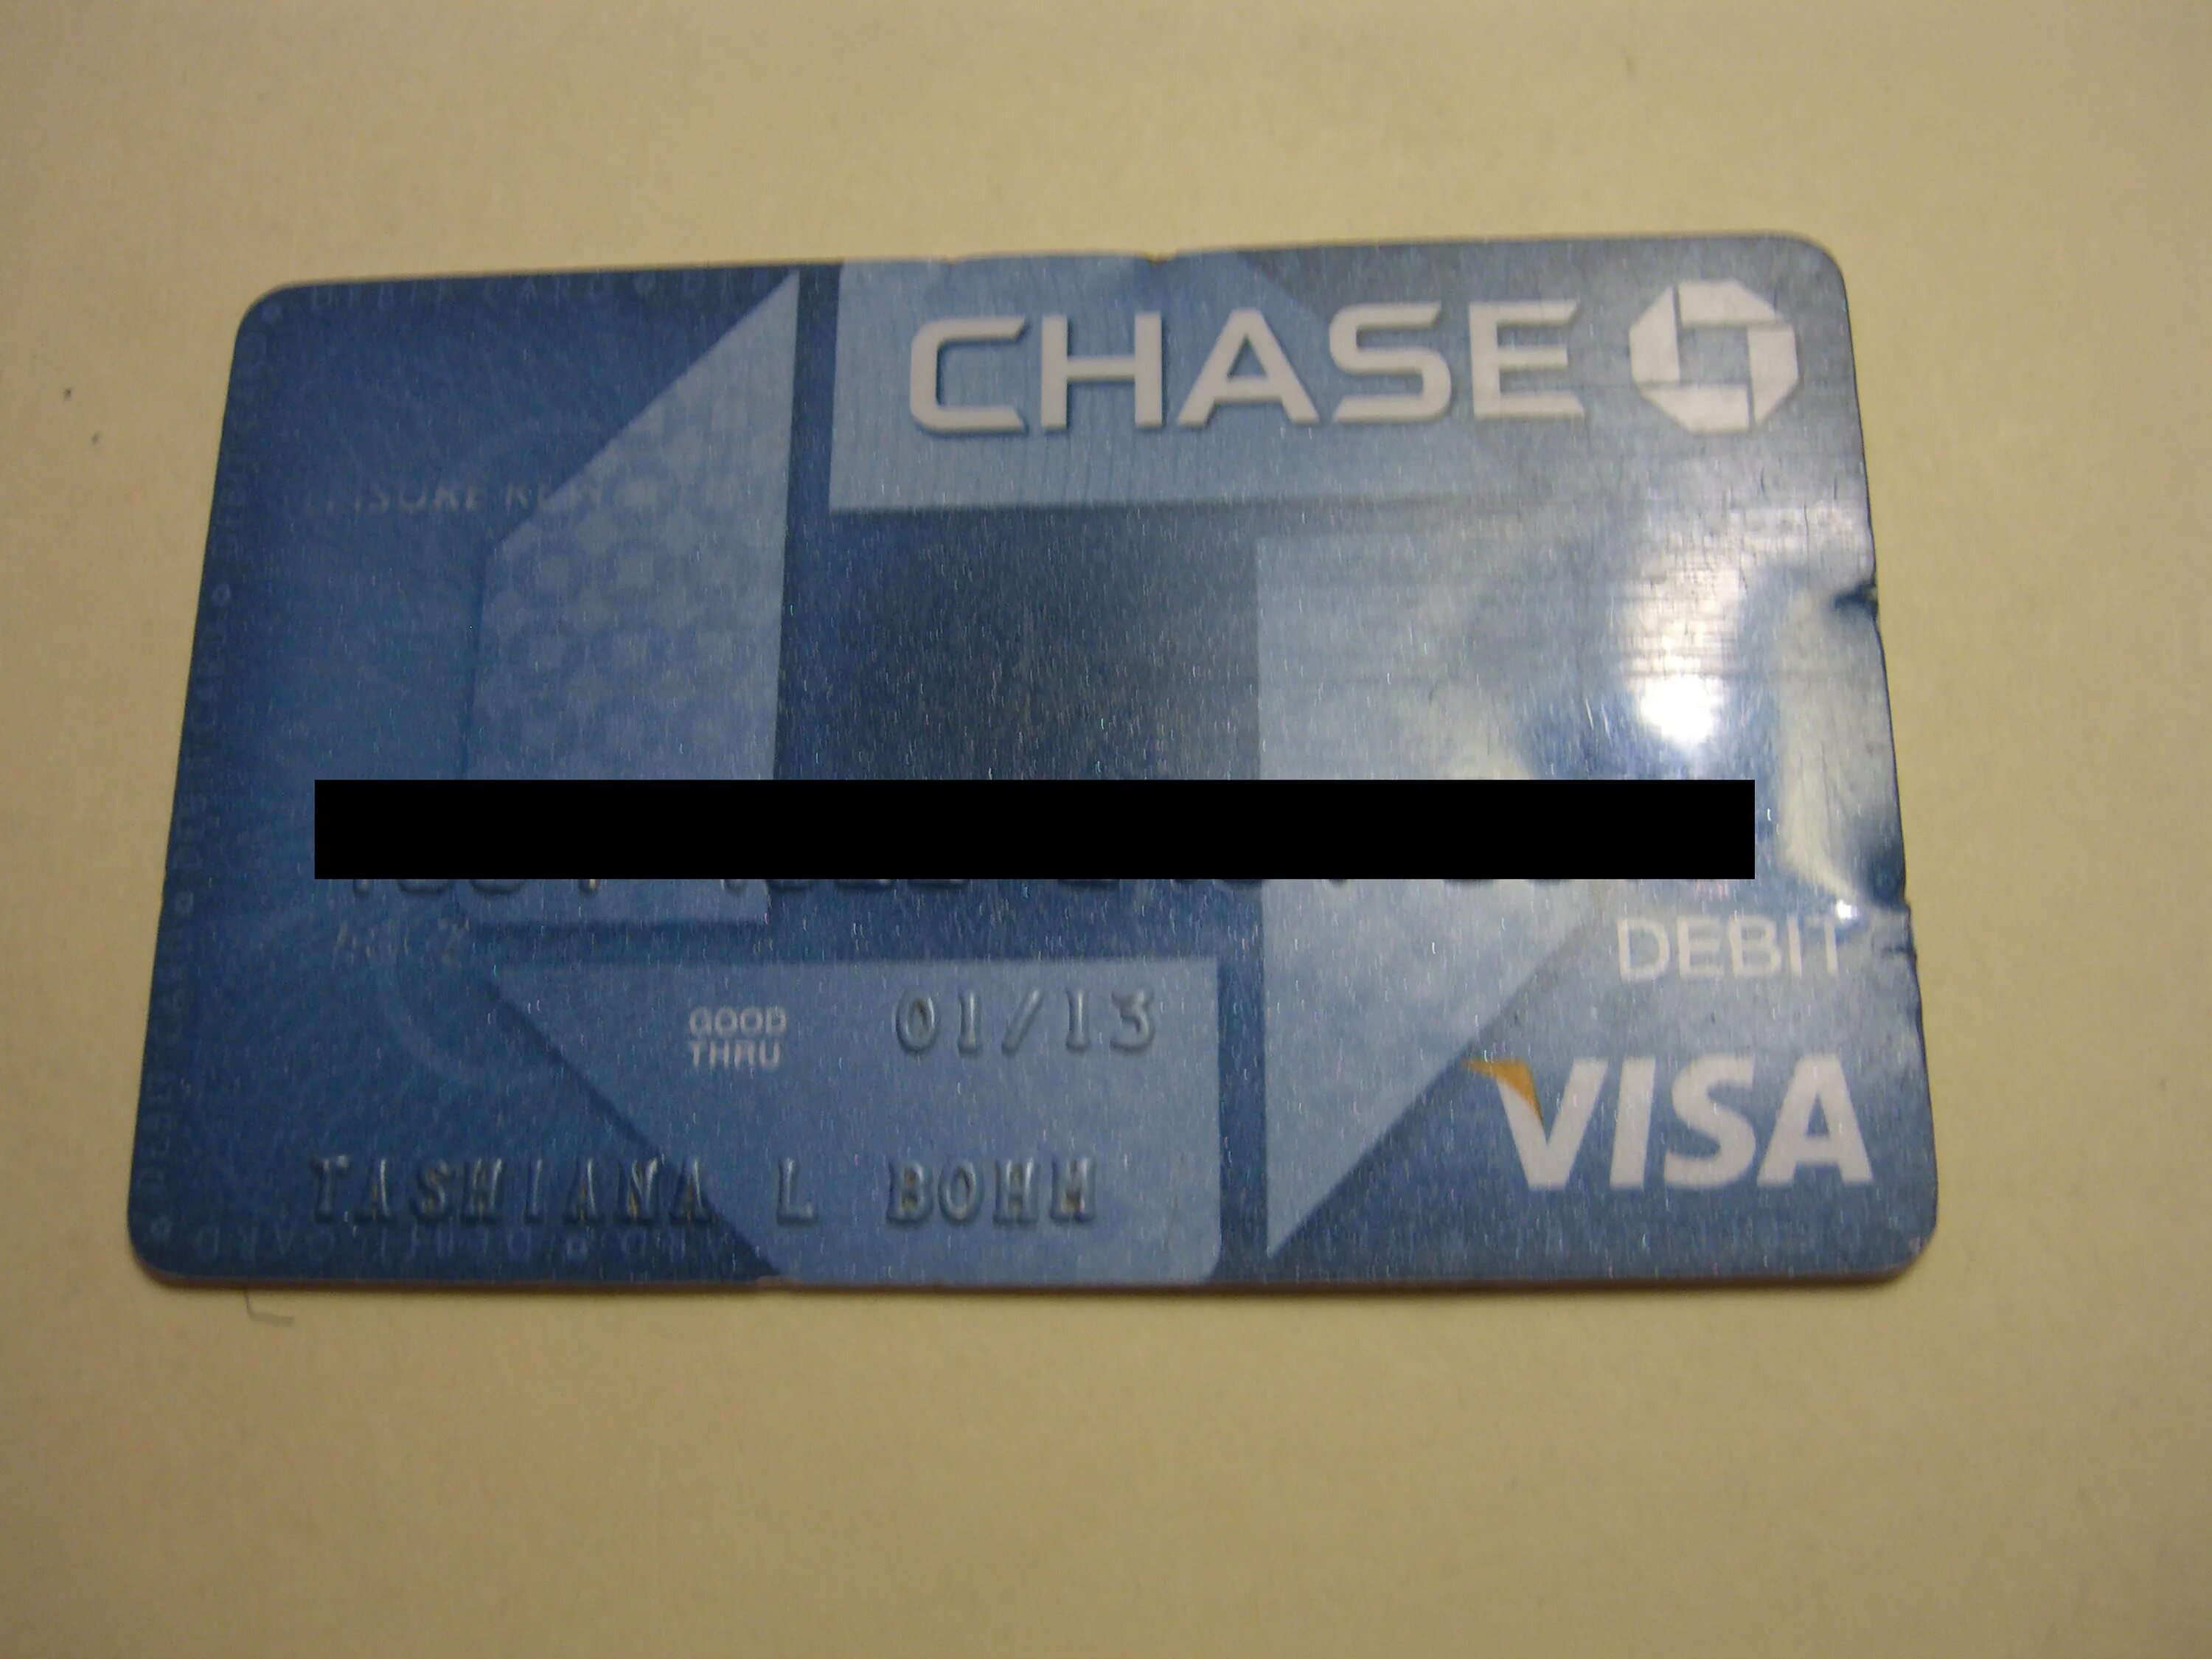 Chase Bank карта. Chase visa Card. Chase Debit Card. Chase Bank visa. Lost bank